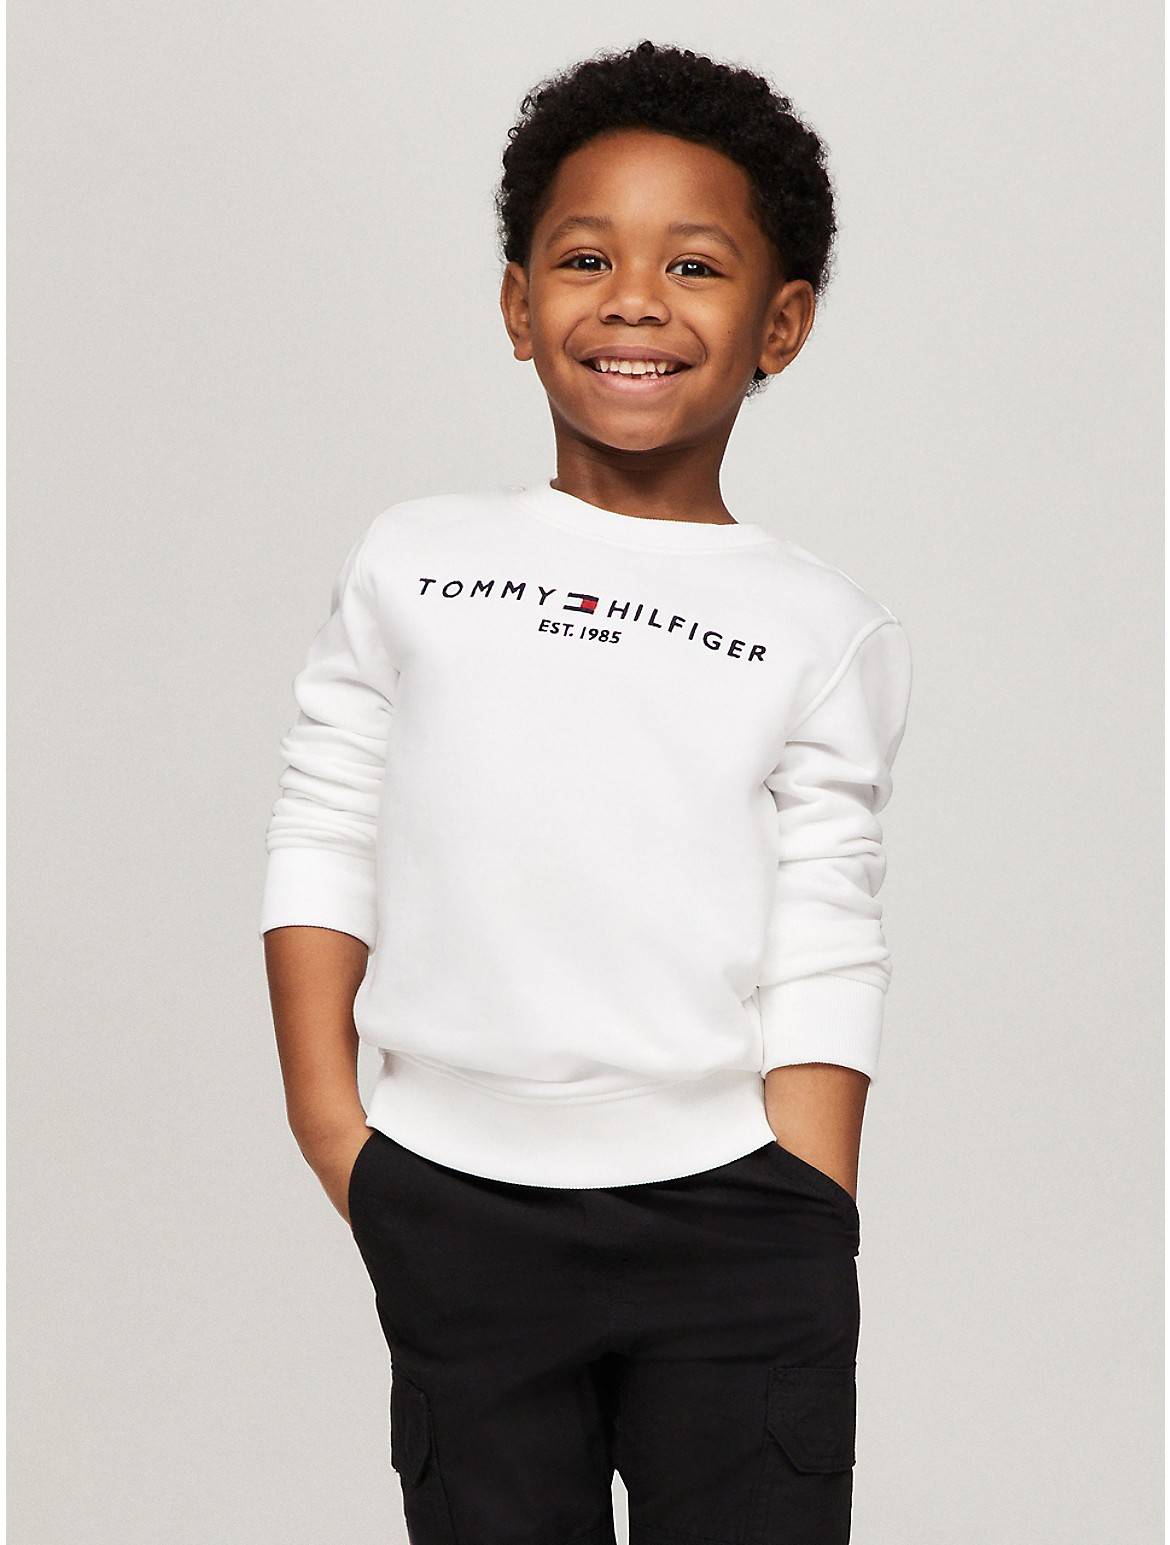 Tommy Hilfiger Boys' Kids' Tommy Logo Sweatshirt